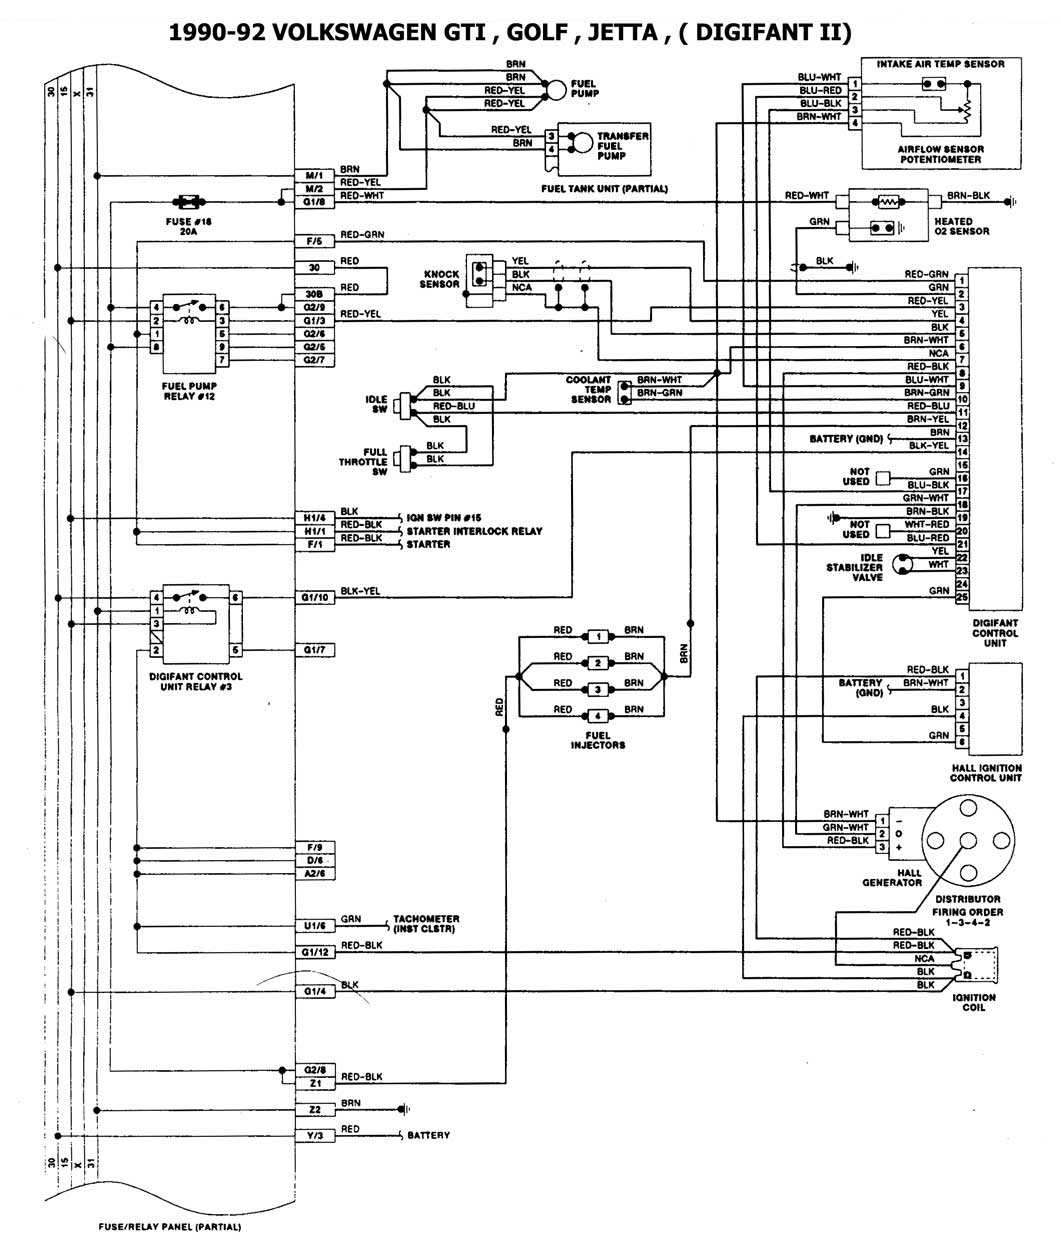 2012 Jetta Fcm Wiring Diagram